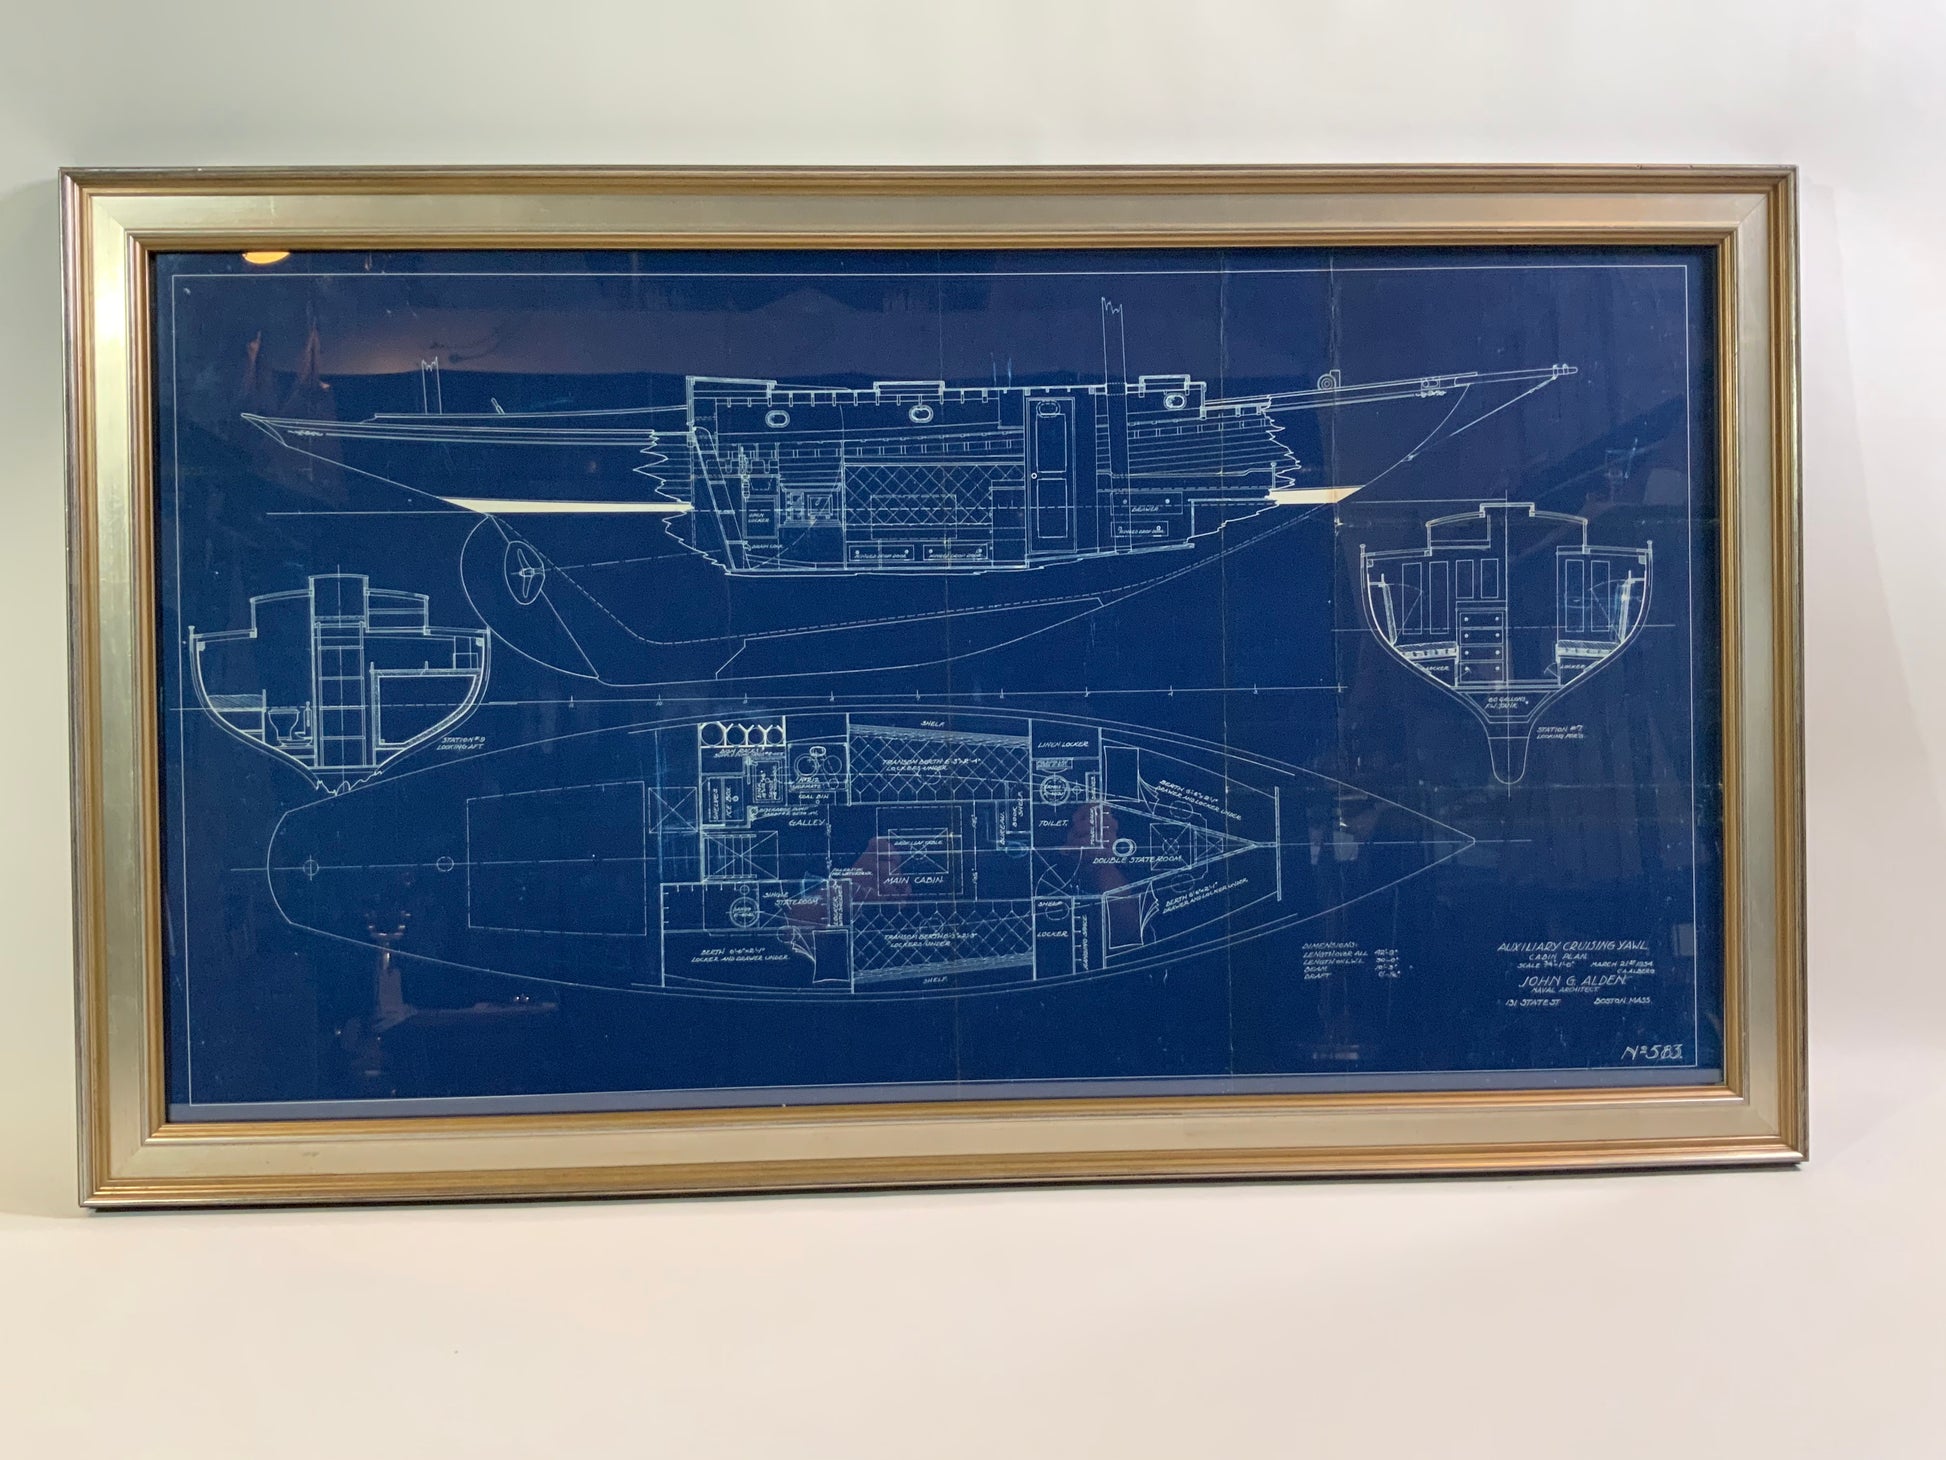 John Alden Blueprint No. 583 of an Auxiliary Cruising Yawl - Lannan Gallery